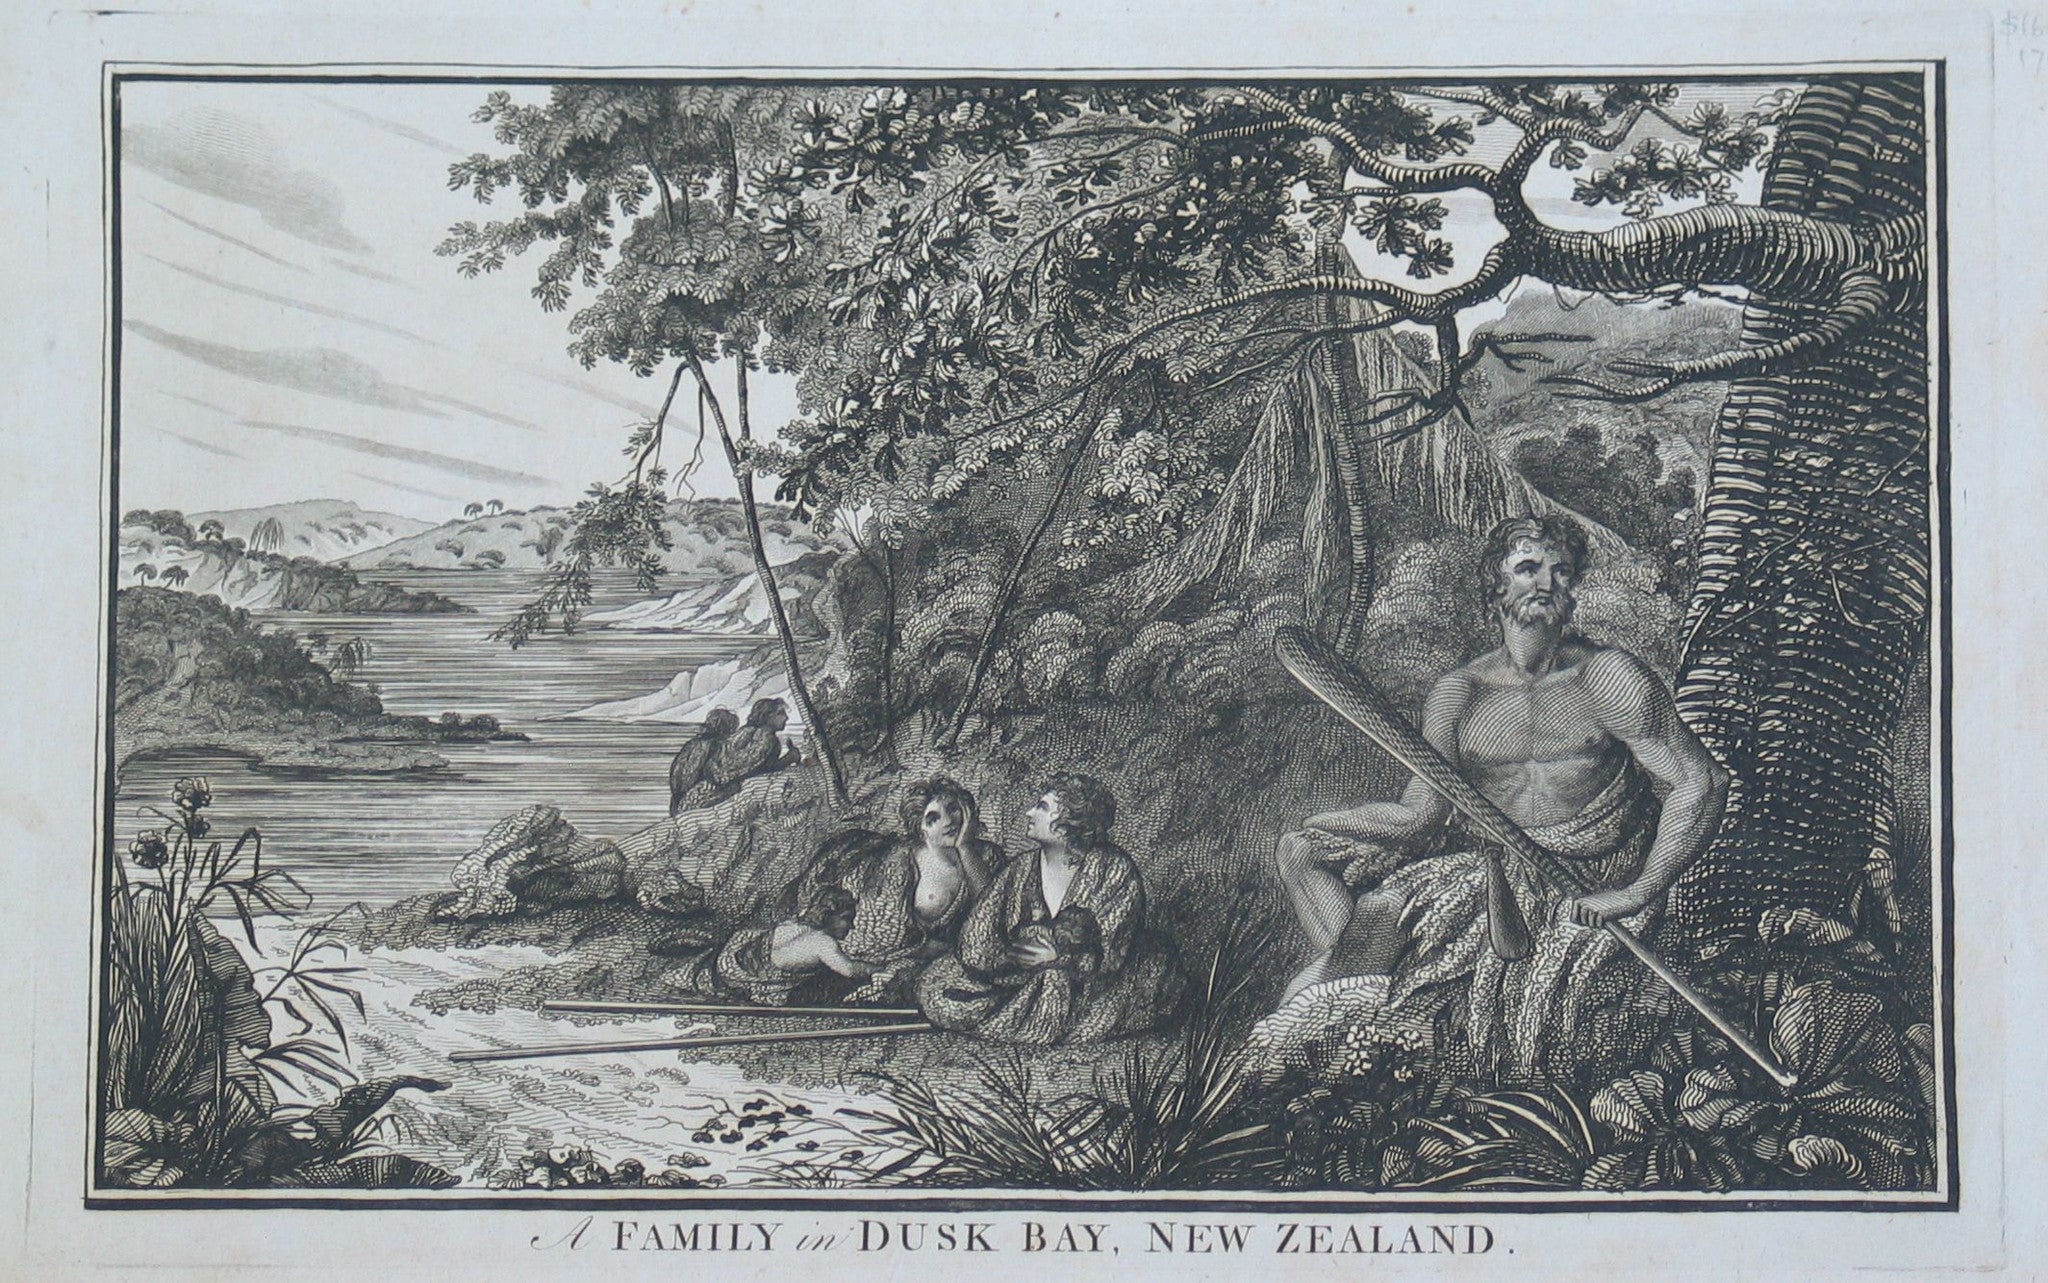 A Family in Dusk (sic) Bay, New Zealand